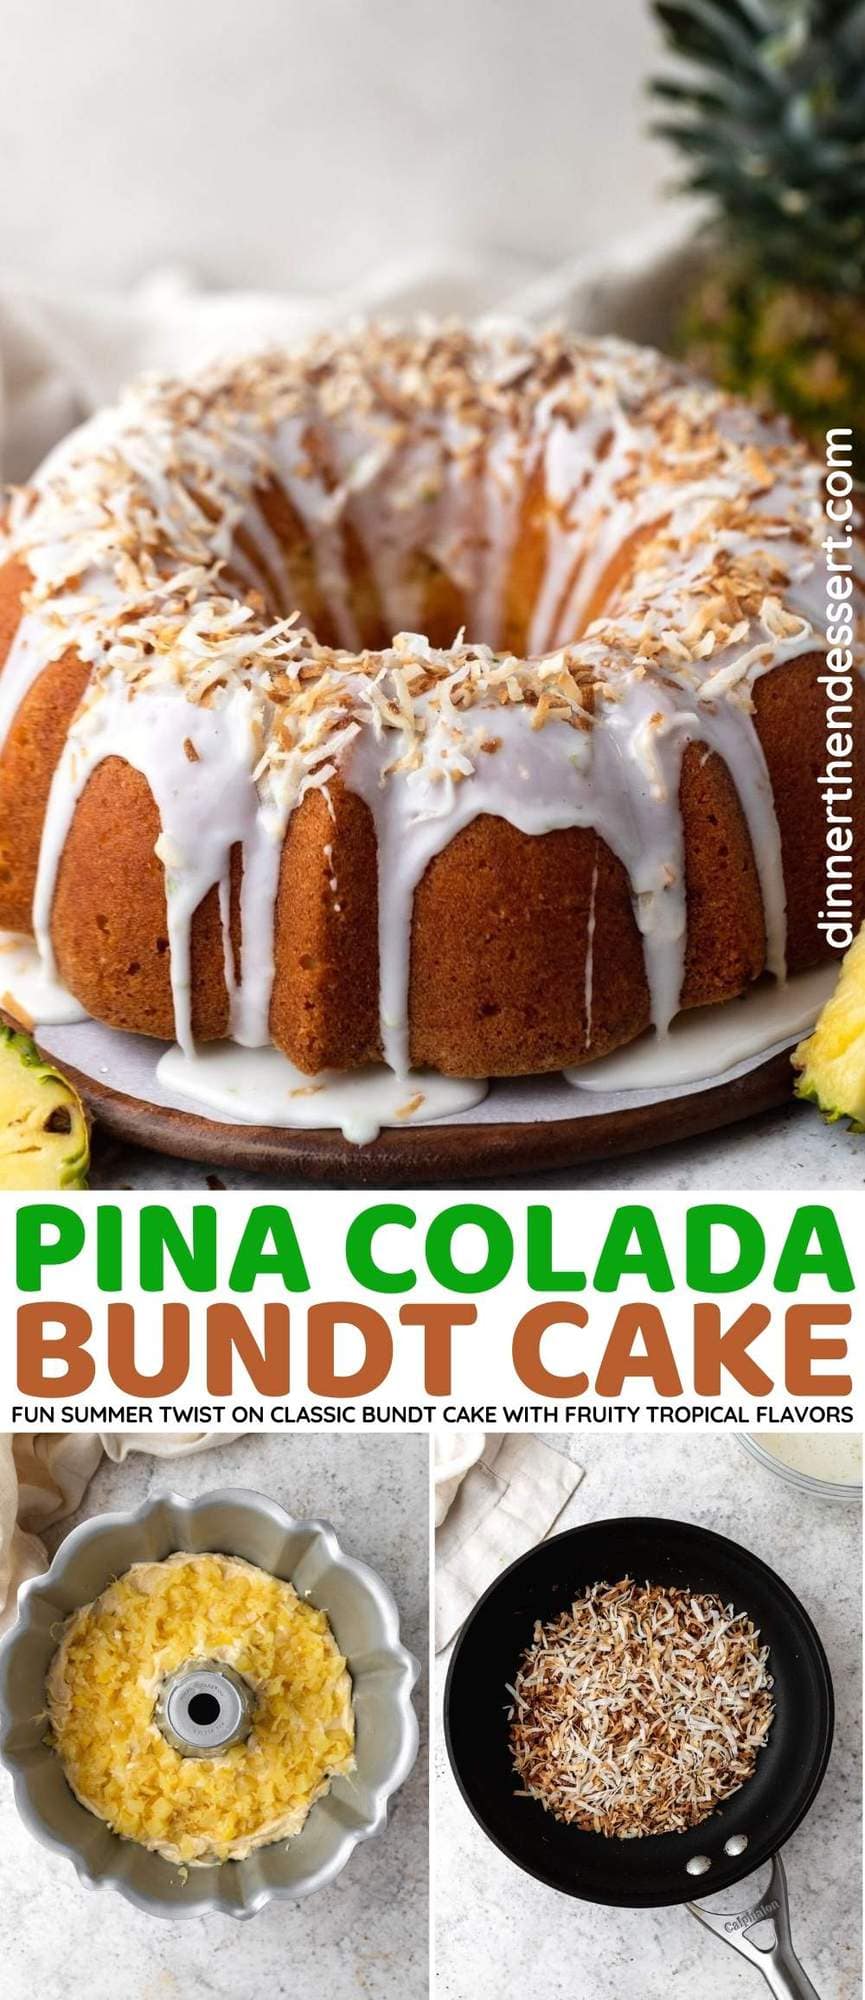 Pina Colada Bundt Cake collage